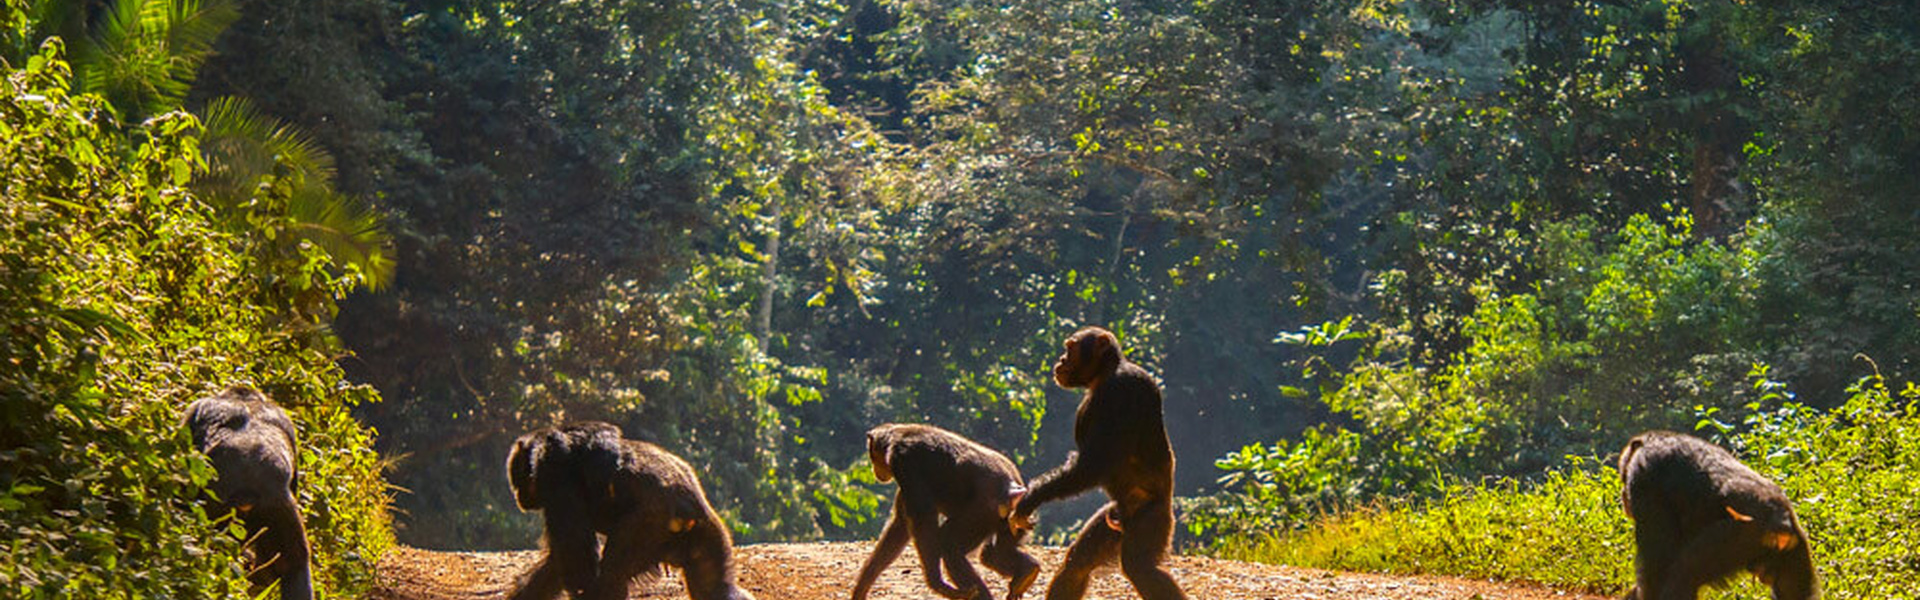 Ouganda - Spécial Primate | Sous l'Acacia